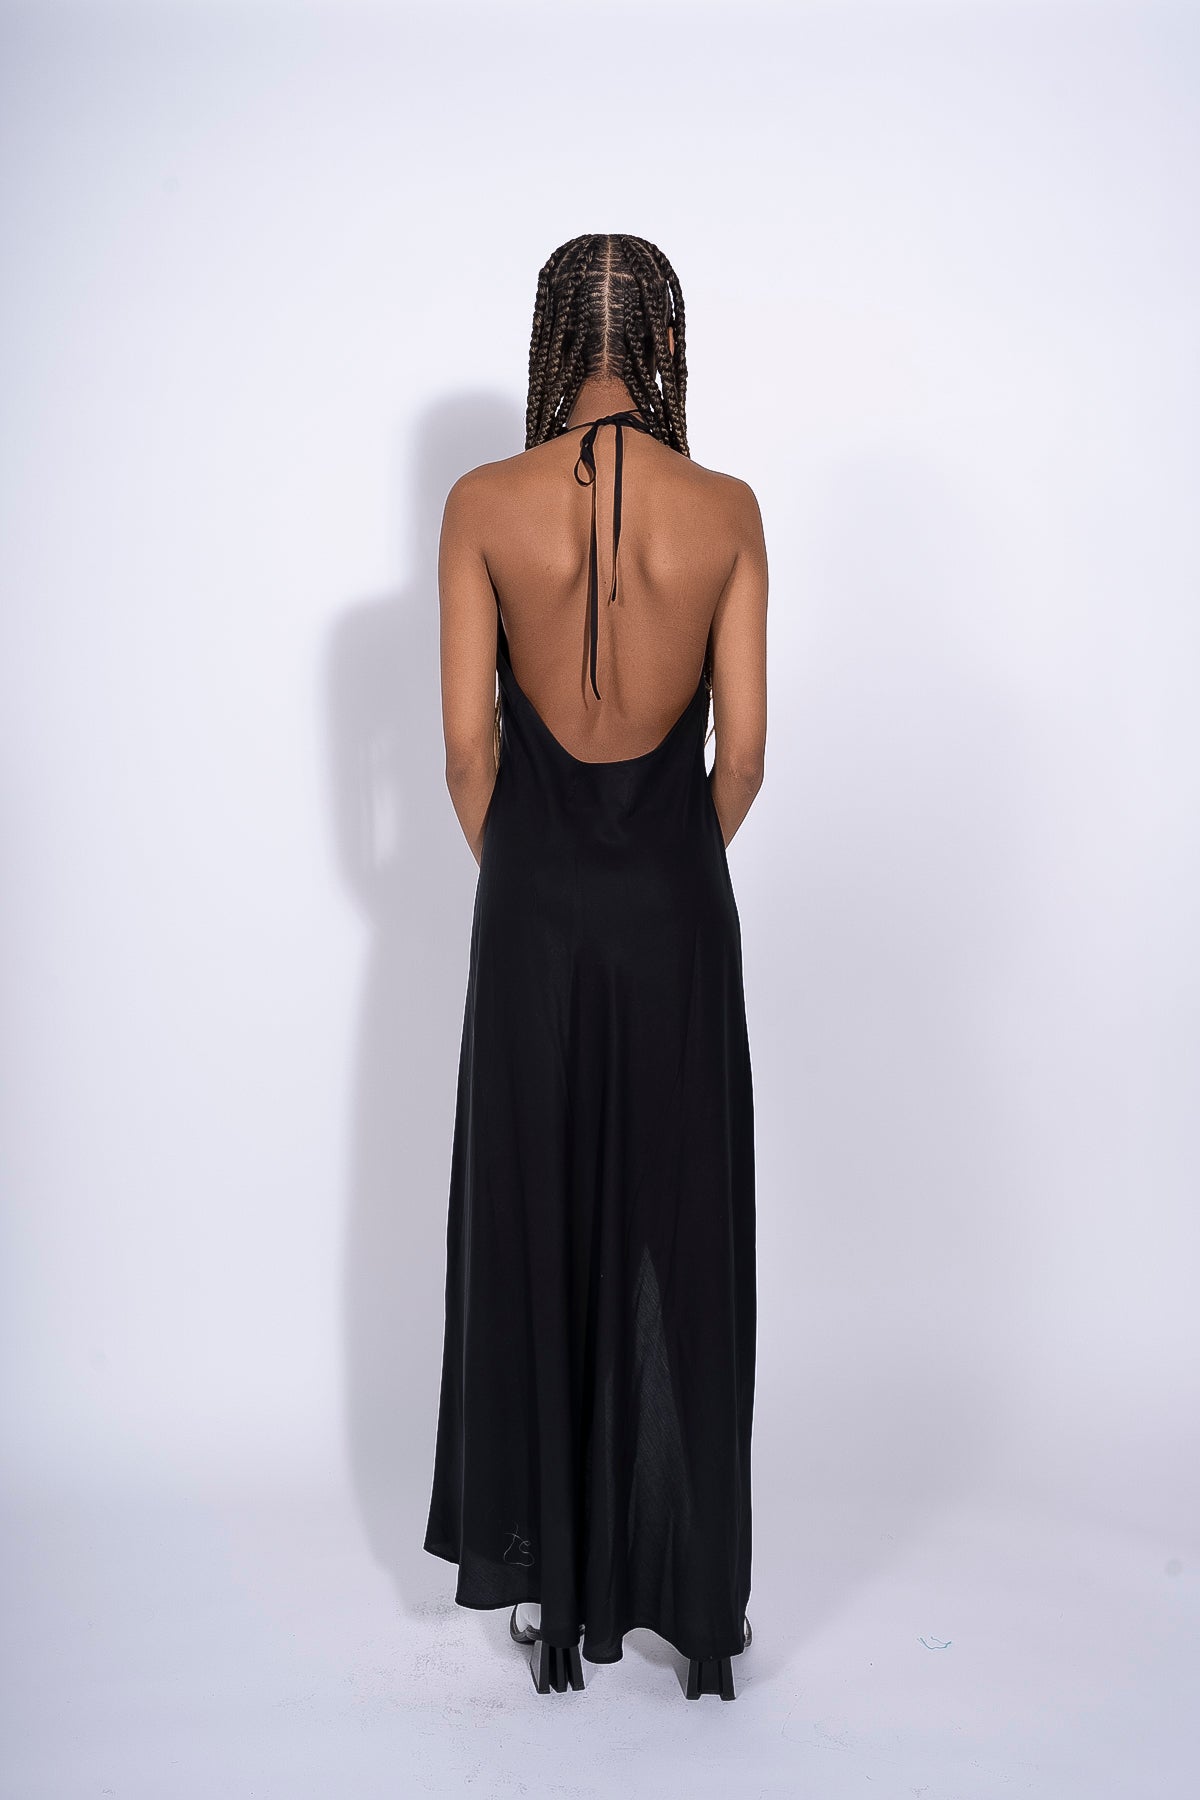 BLACK HALTERNECK DRESS marques almeida